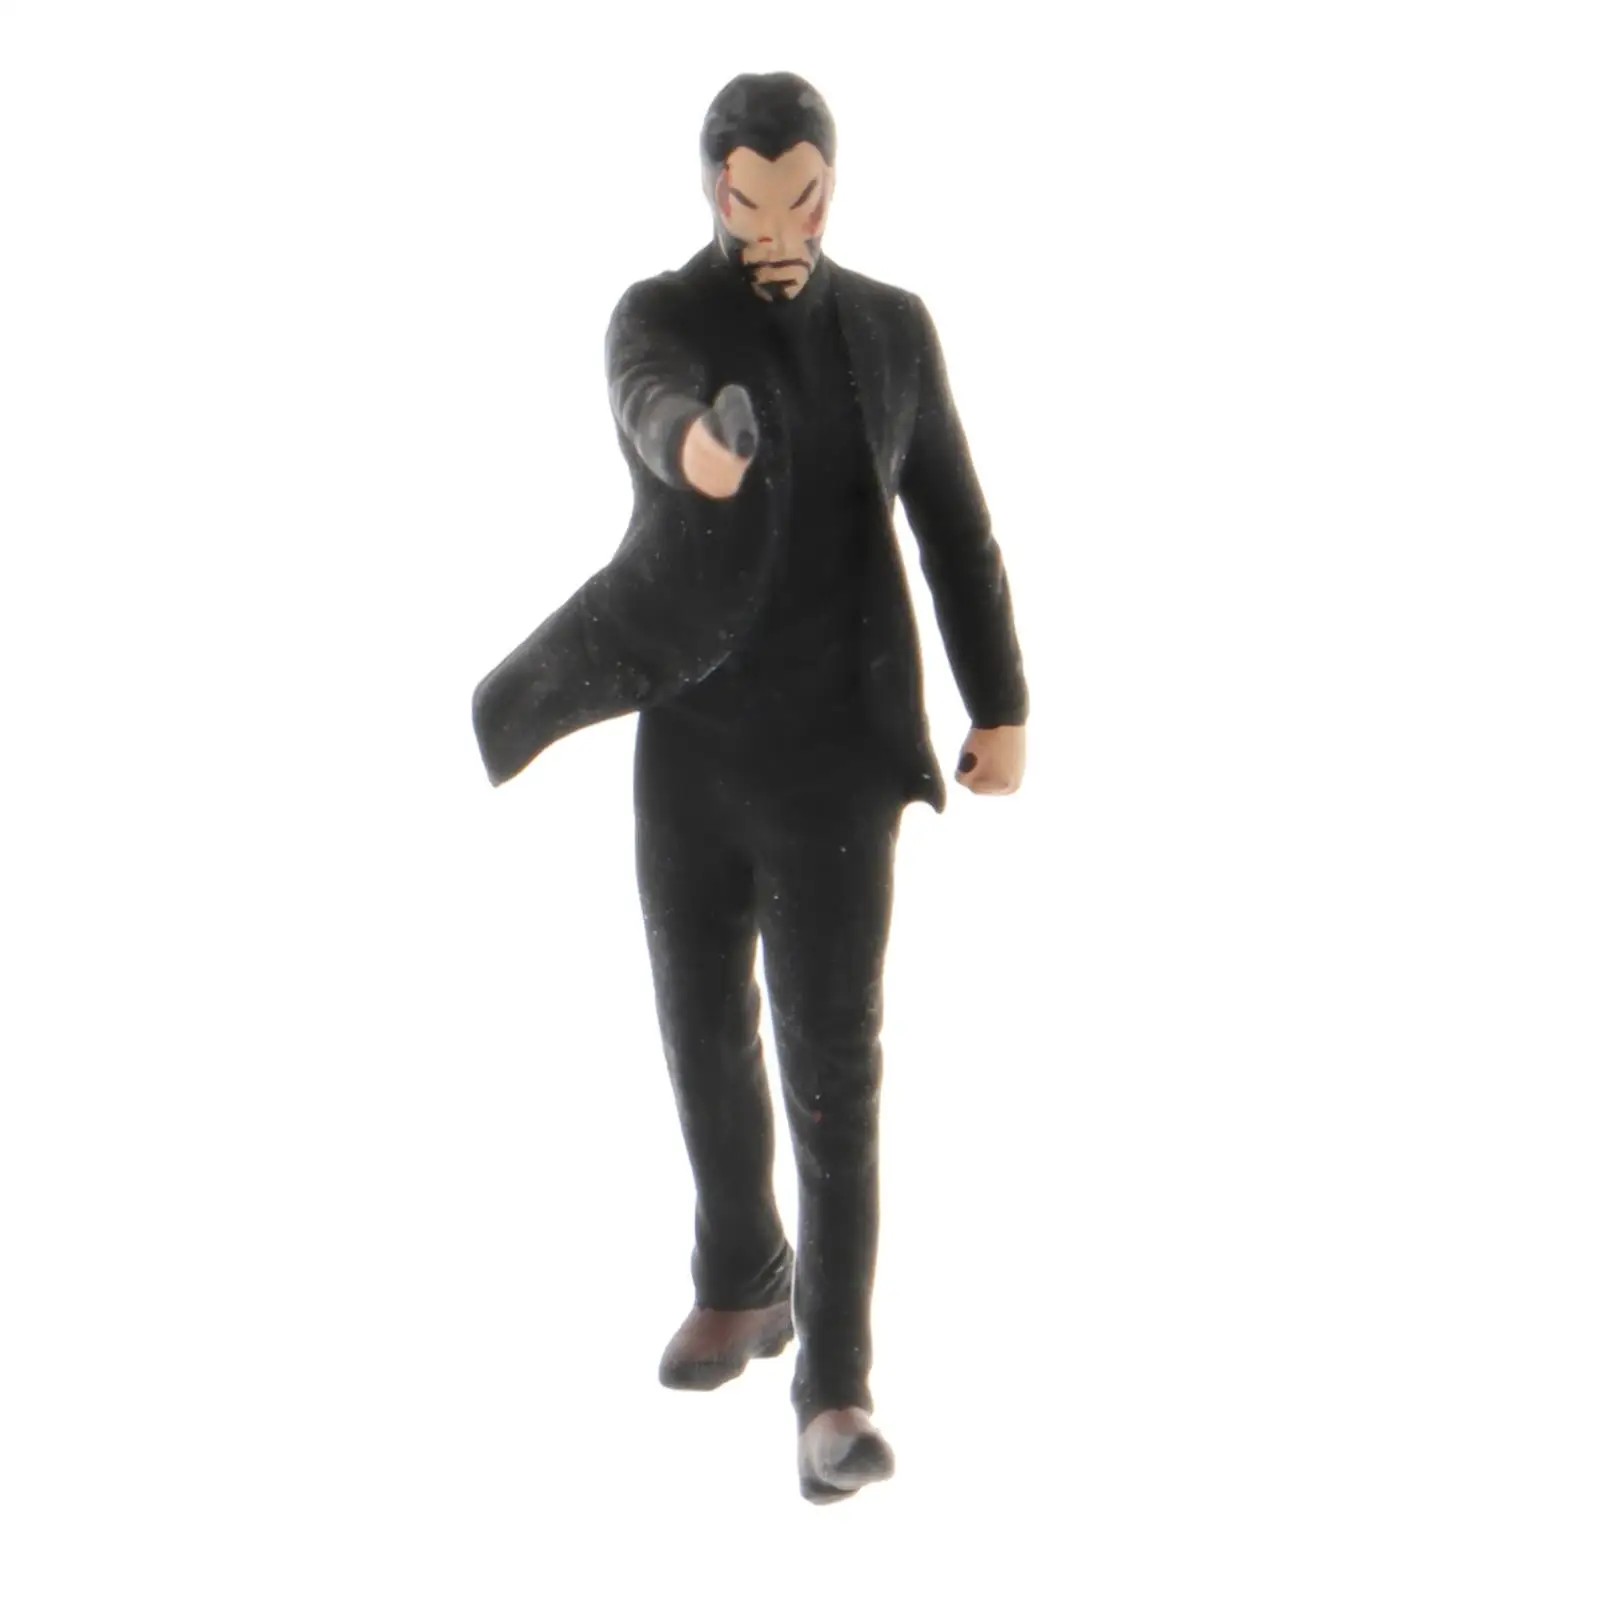 1/64 Scale Race Medal Figure Diorama John  Core Movie Character Model Scene